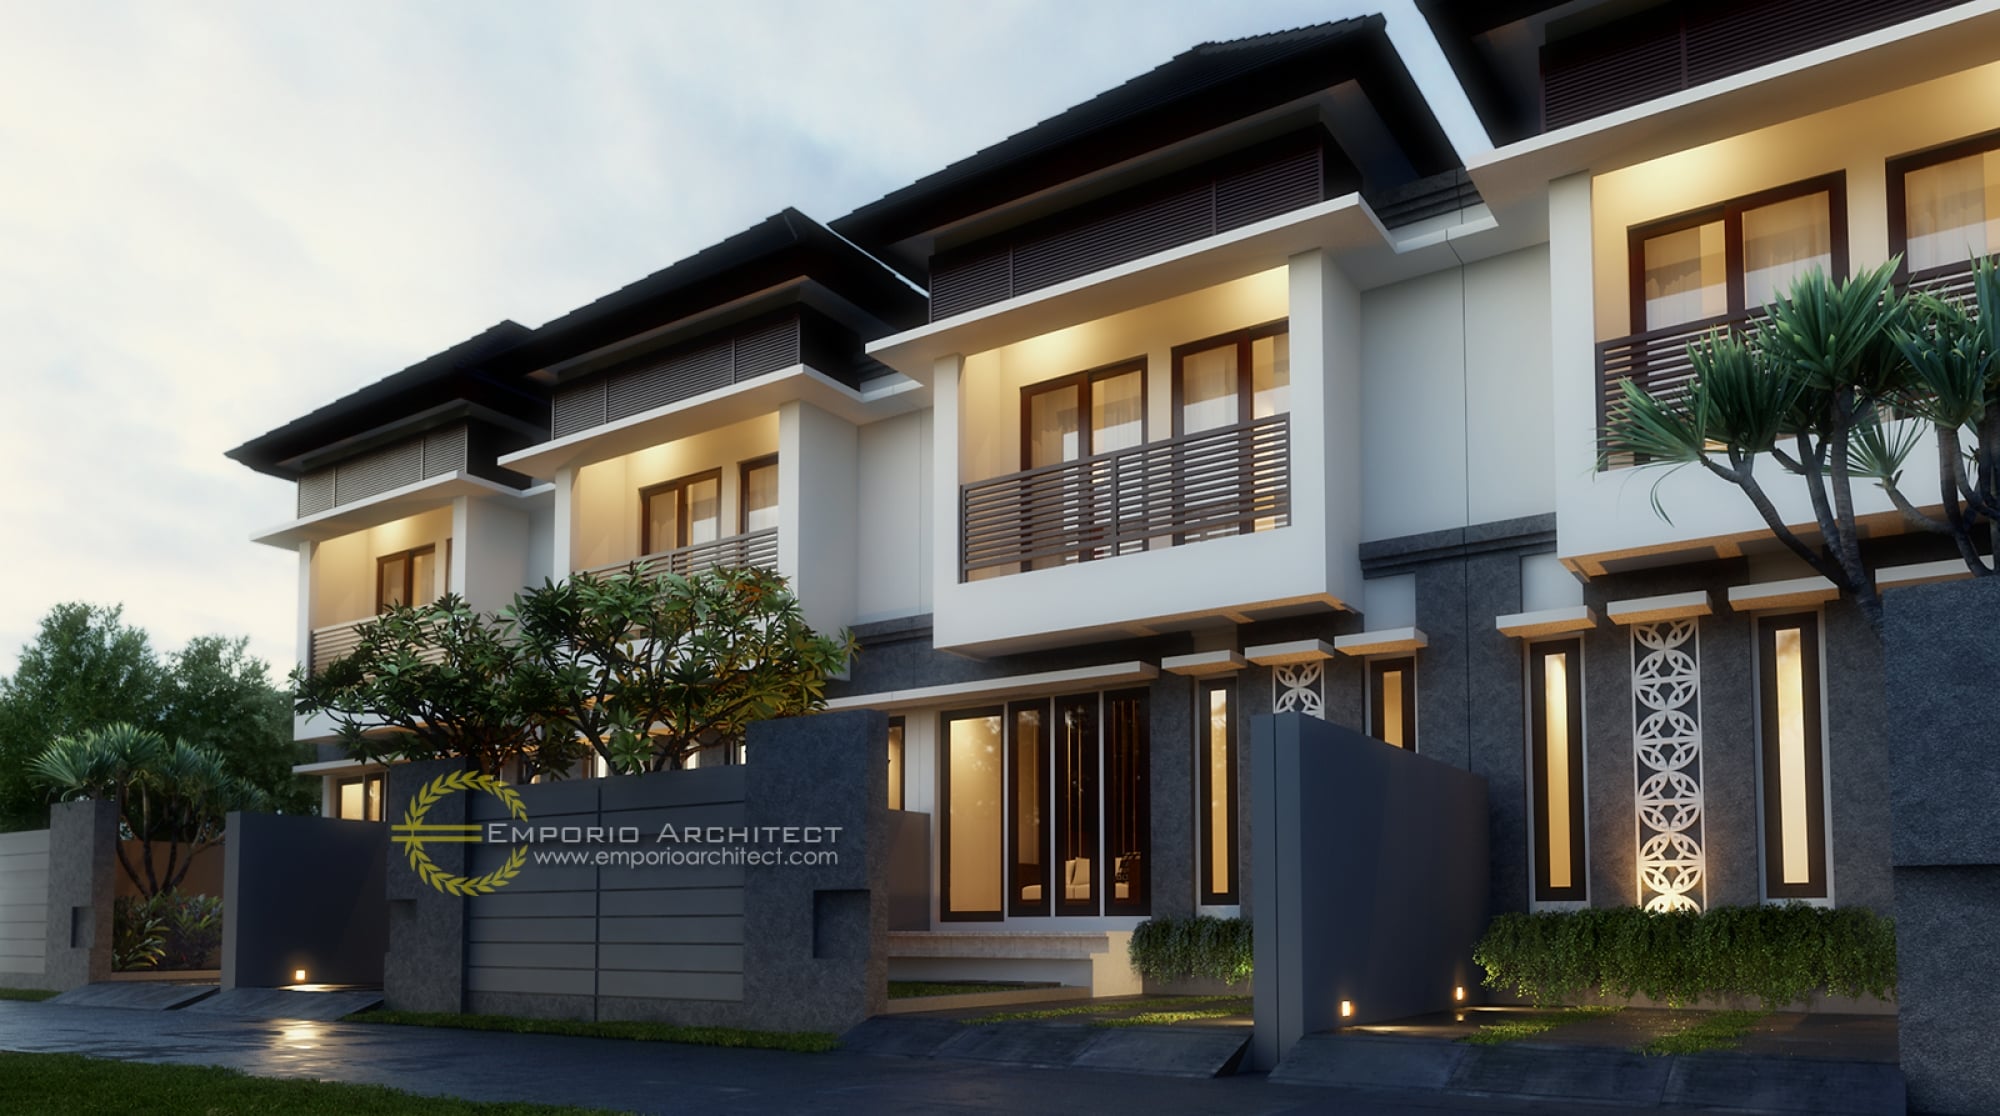 89 Ide Desain Pagar  Rumah  Bali  Modern Yang Wajib Kamu Ketahui Deagam 